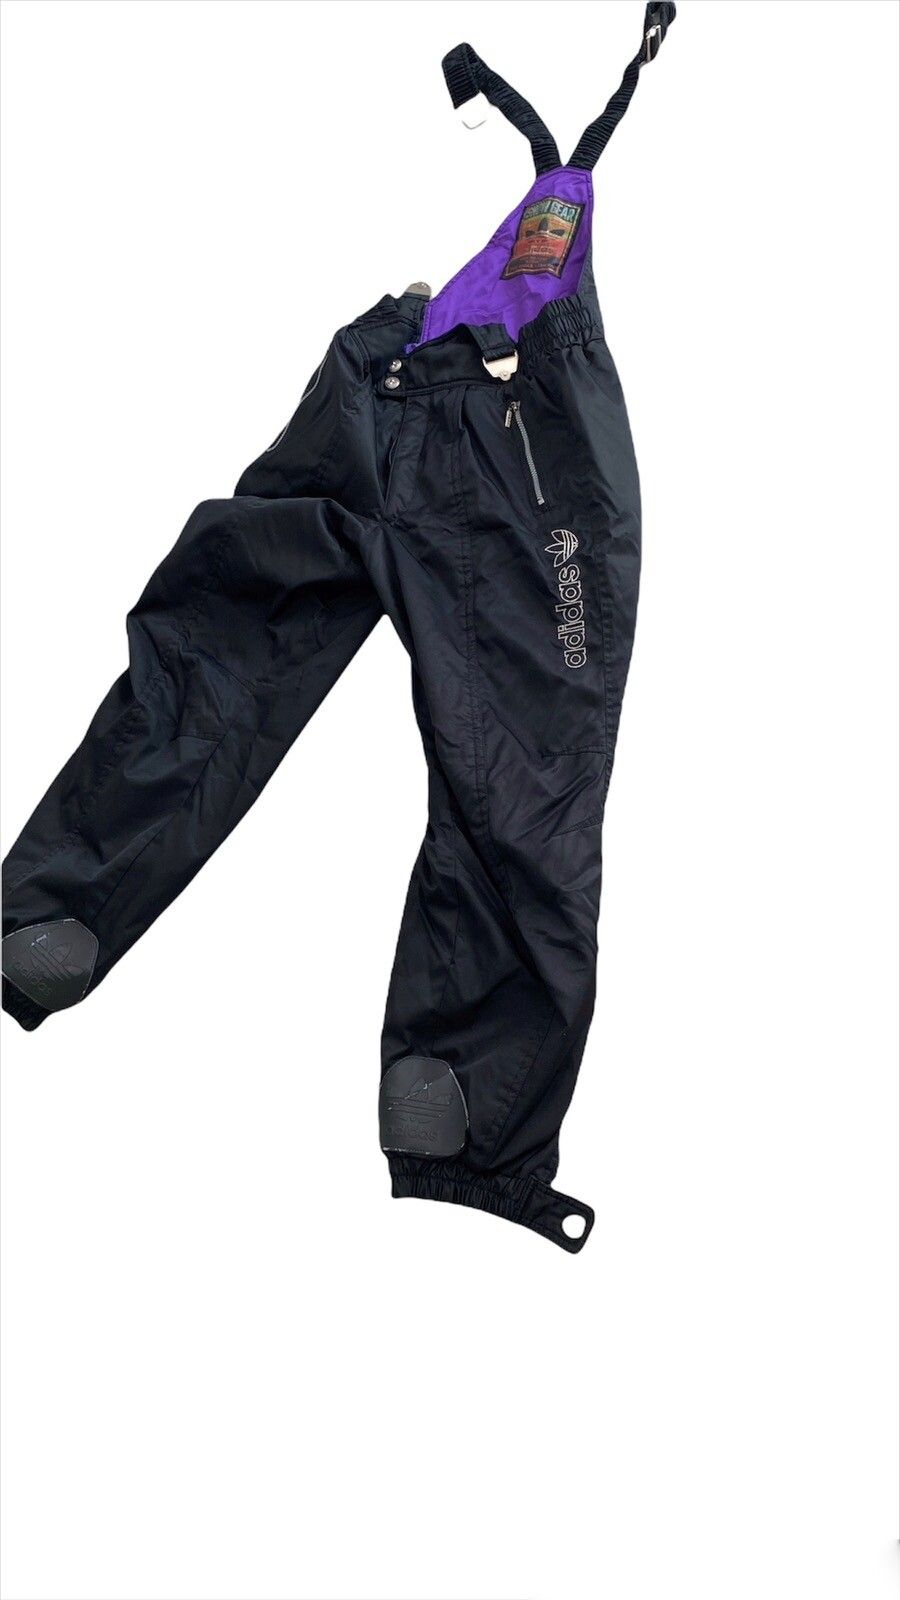 Adidas Adidas Snow Gear Overalls Ski Pants Big Logo Size US 32 / EU 48 - 2 Preview